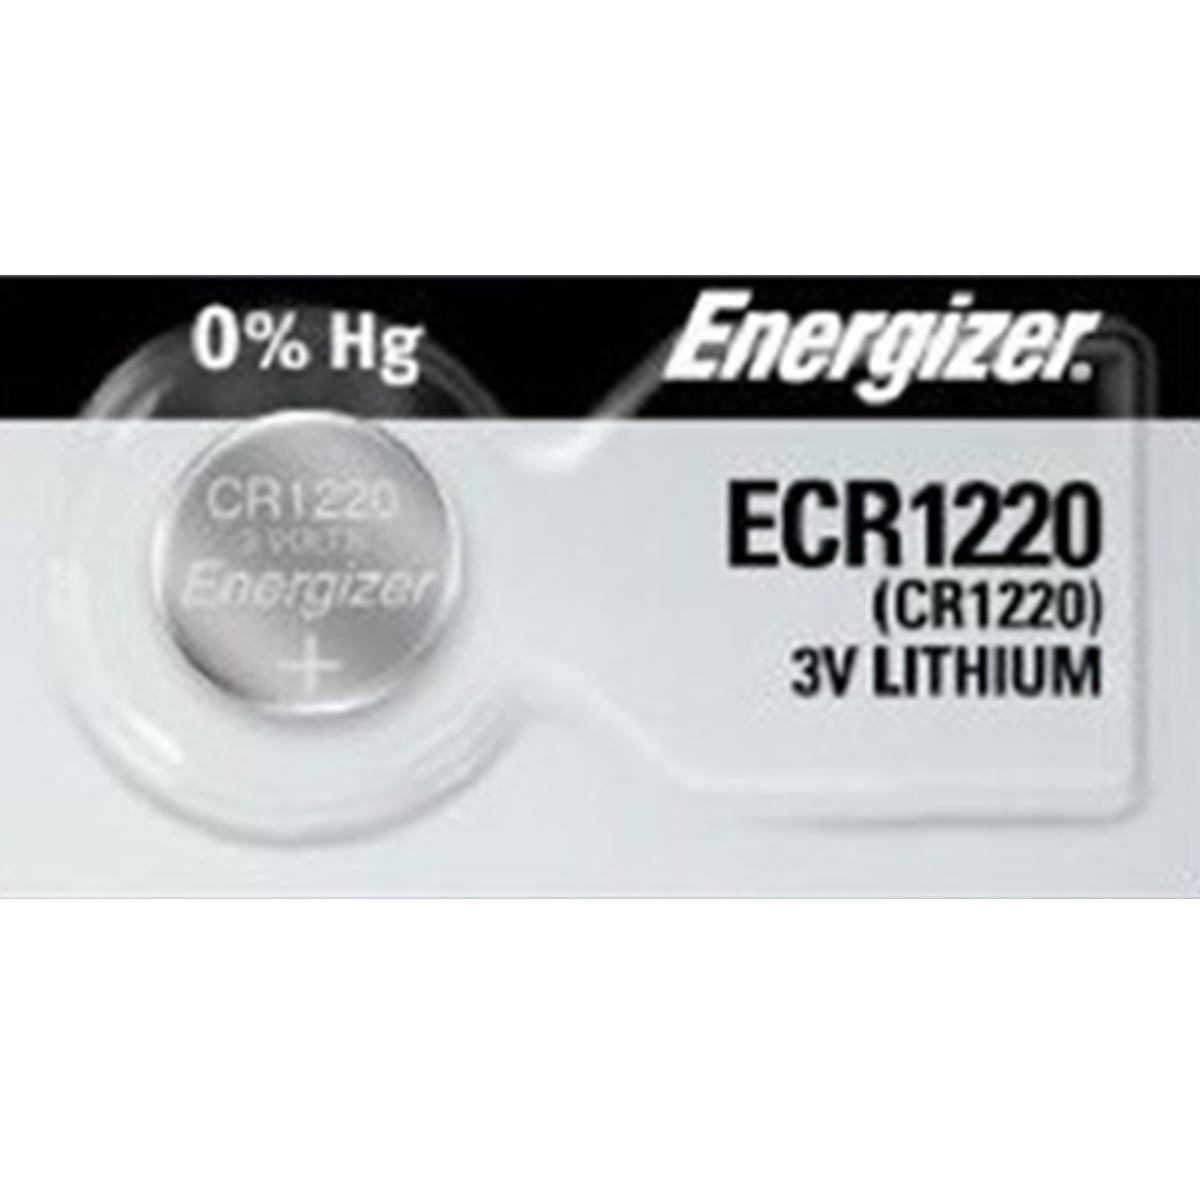 Energizer ECR1220 Battery 3V Lithium Coin Cell (1PC Tearstrip)